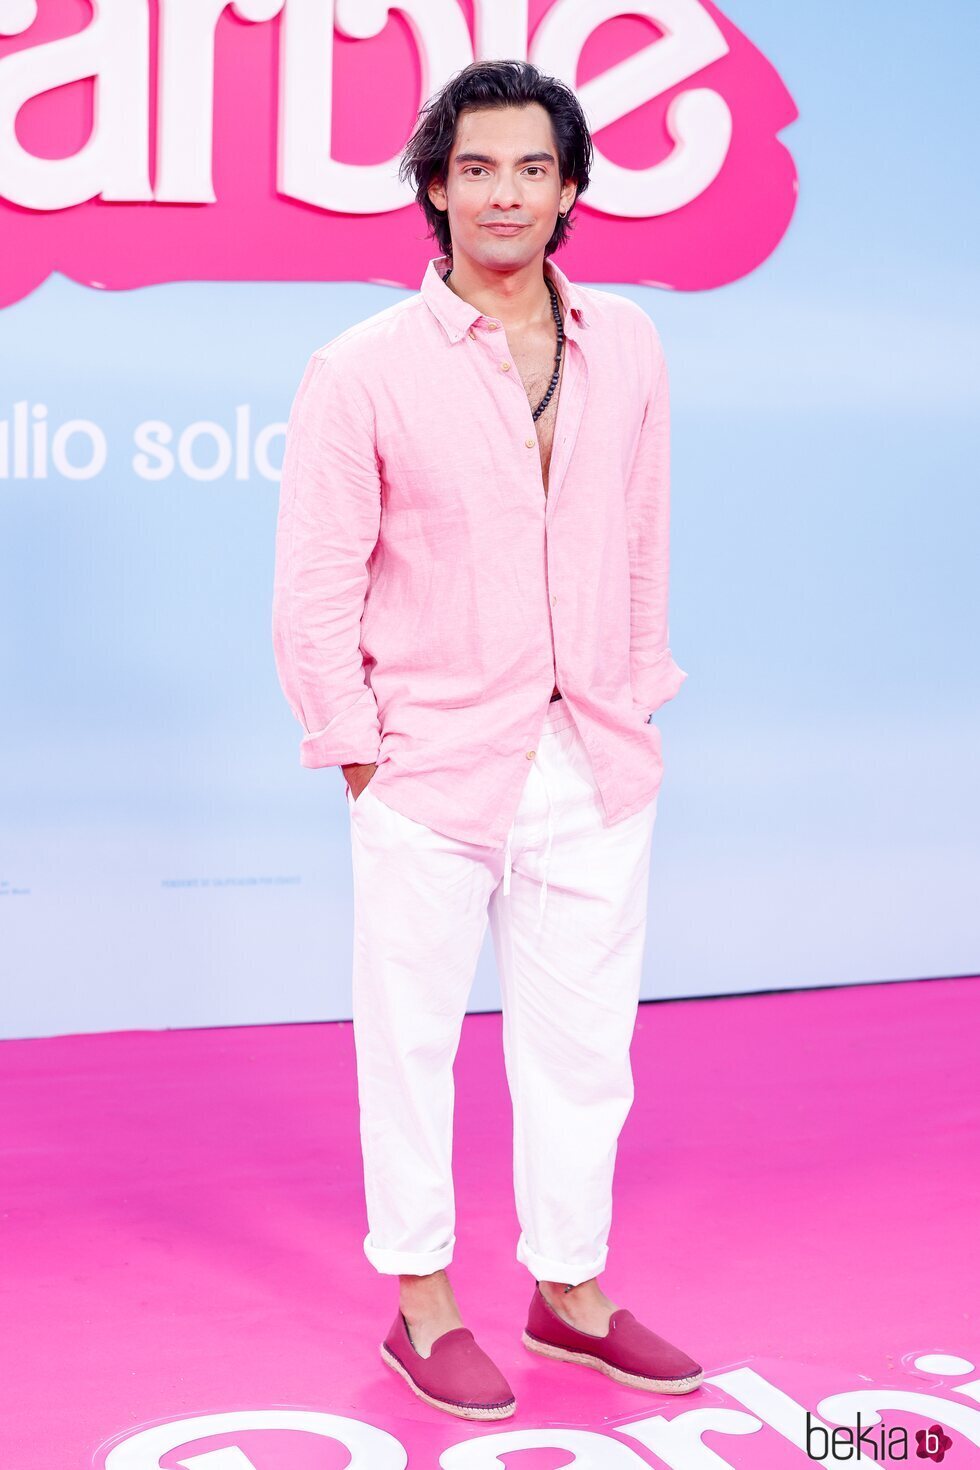 Alejandro Reyes en la premiere de 'Barbie' en Madrid